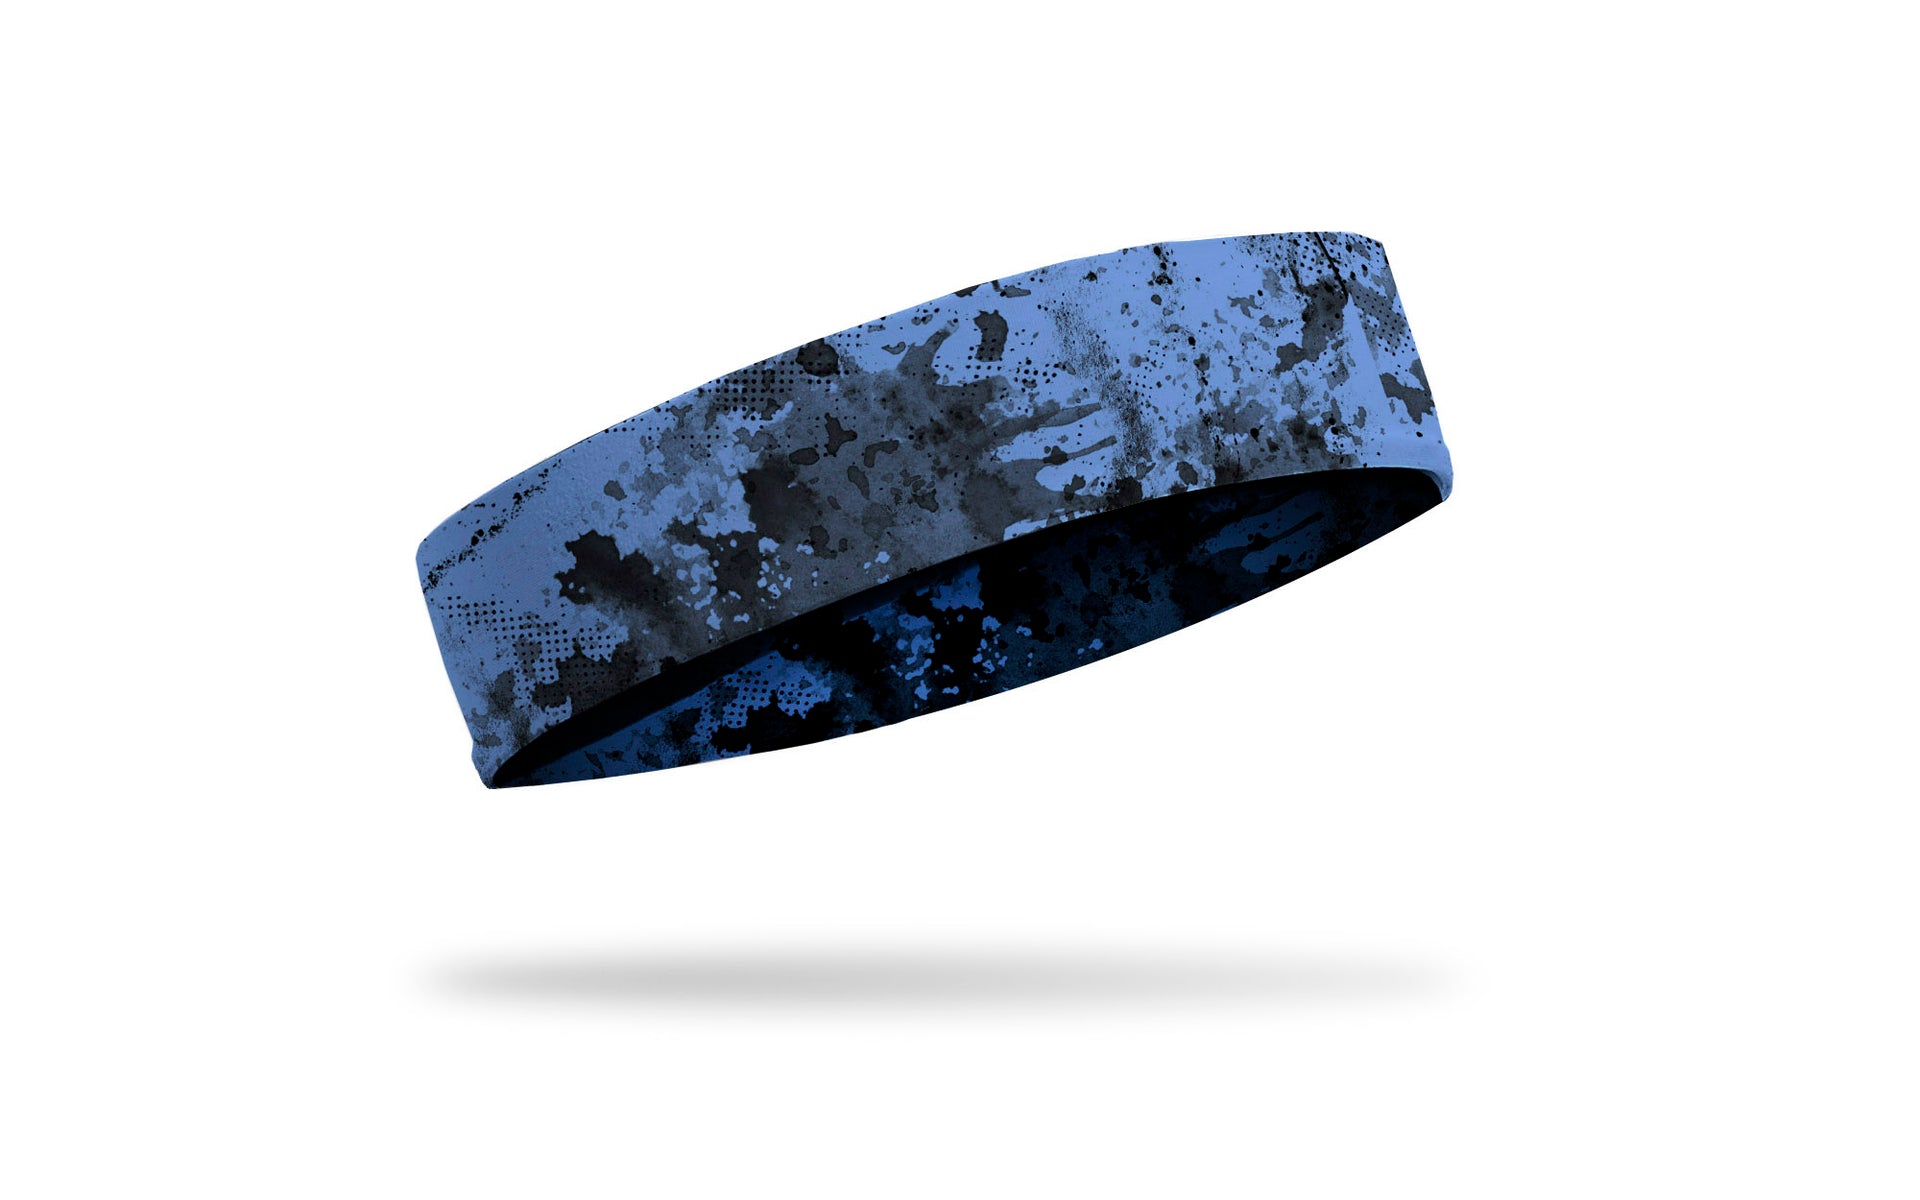 baby blue headband with grunge overlay design